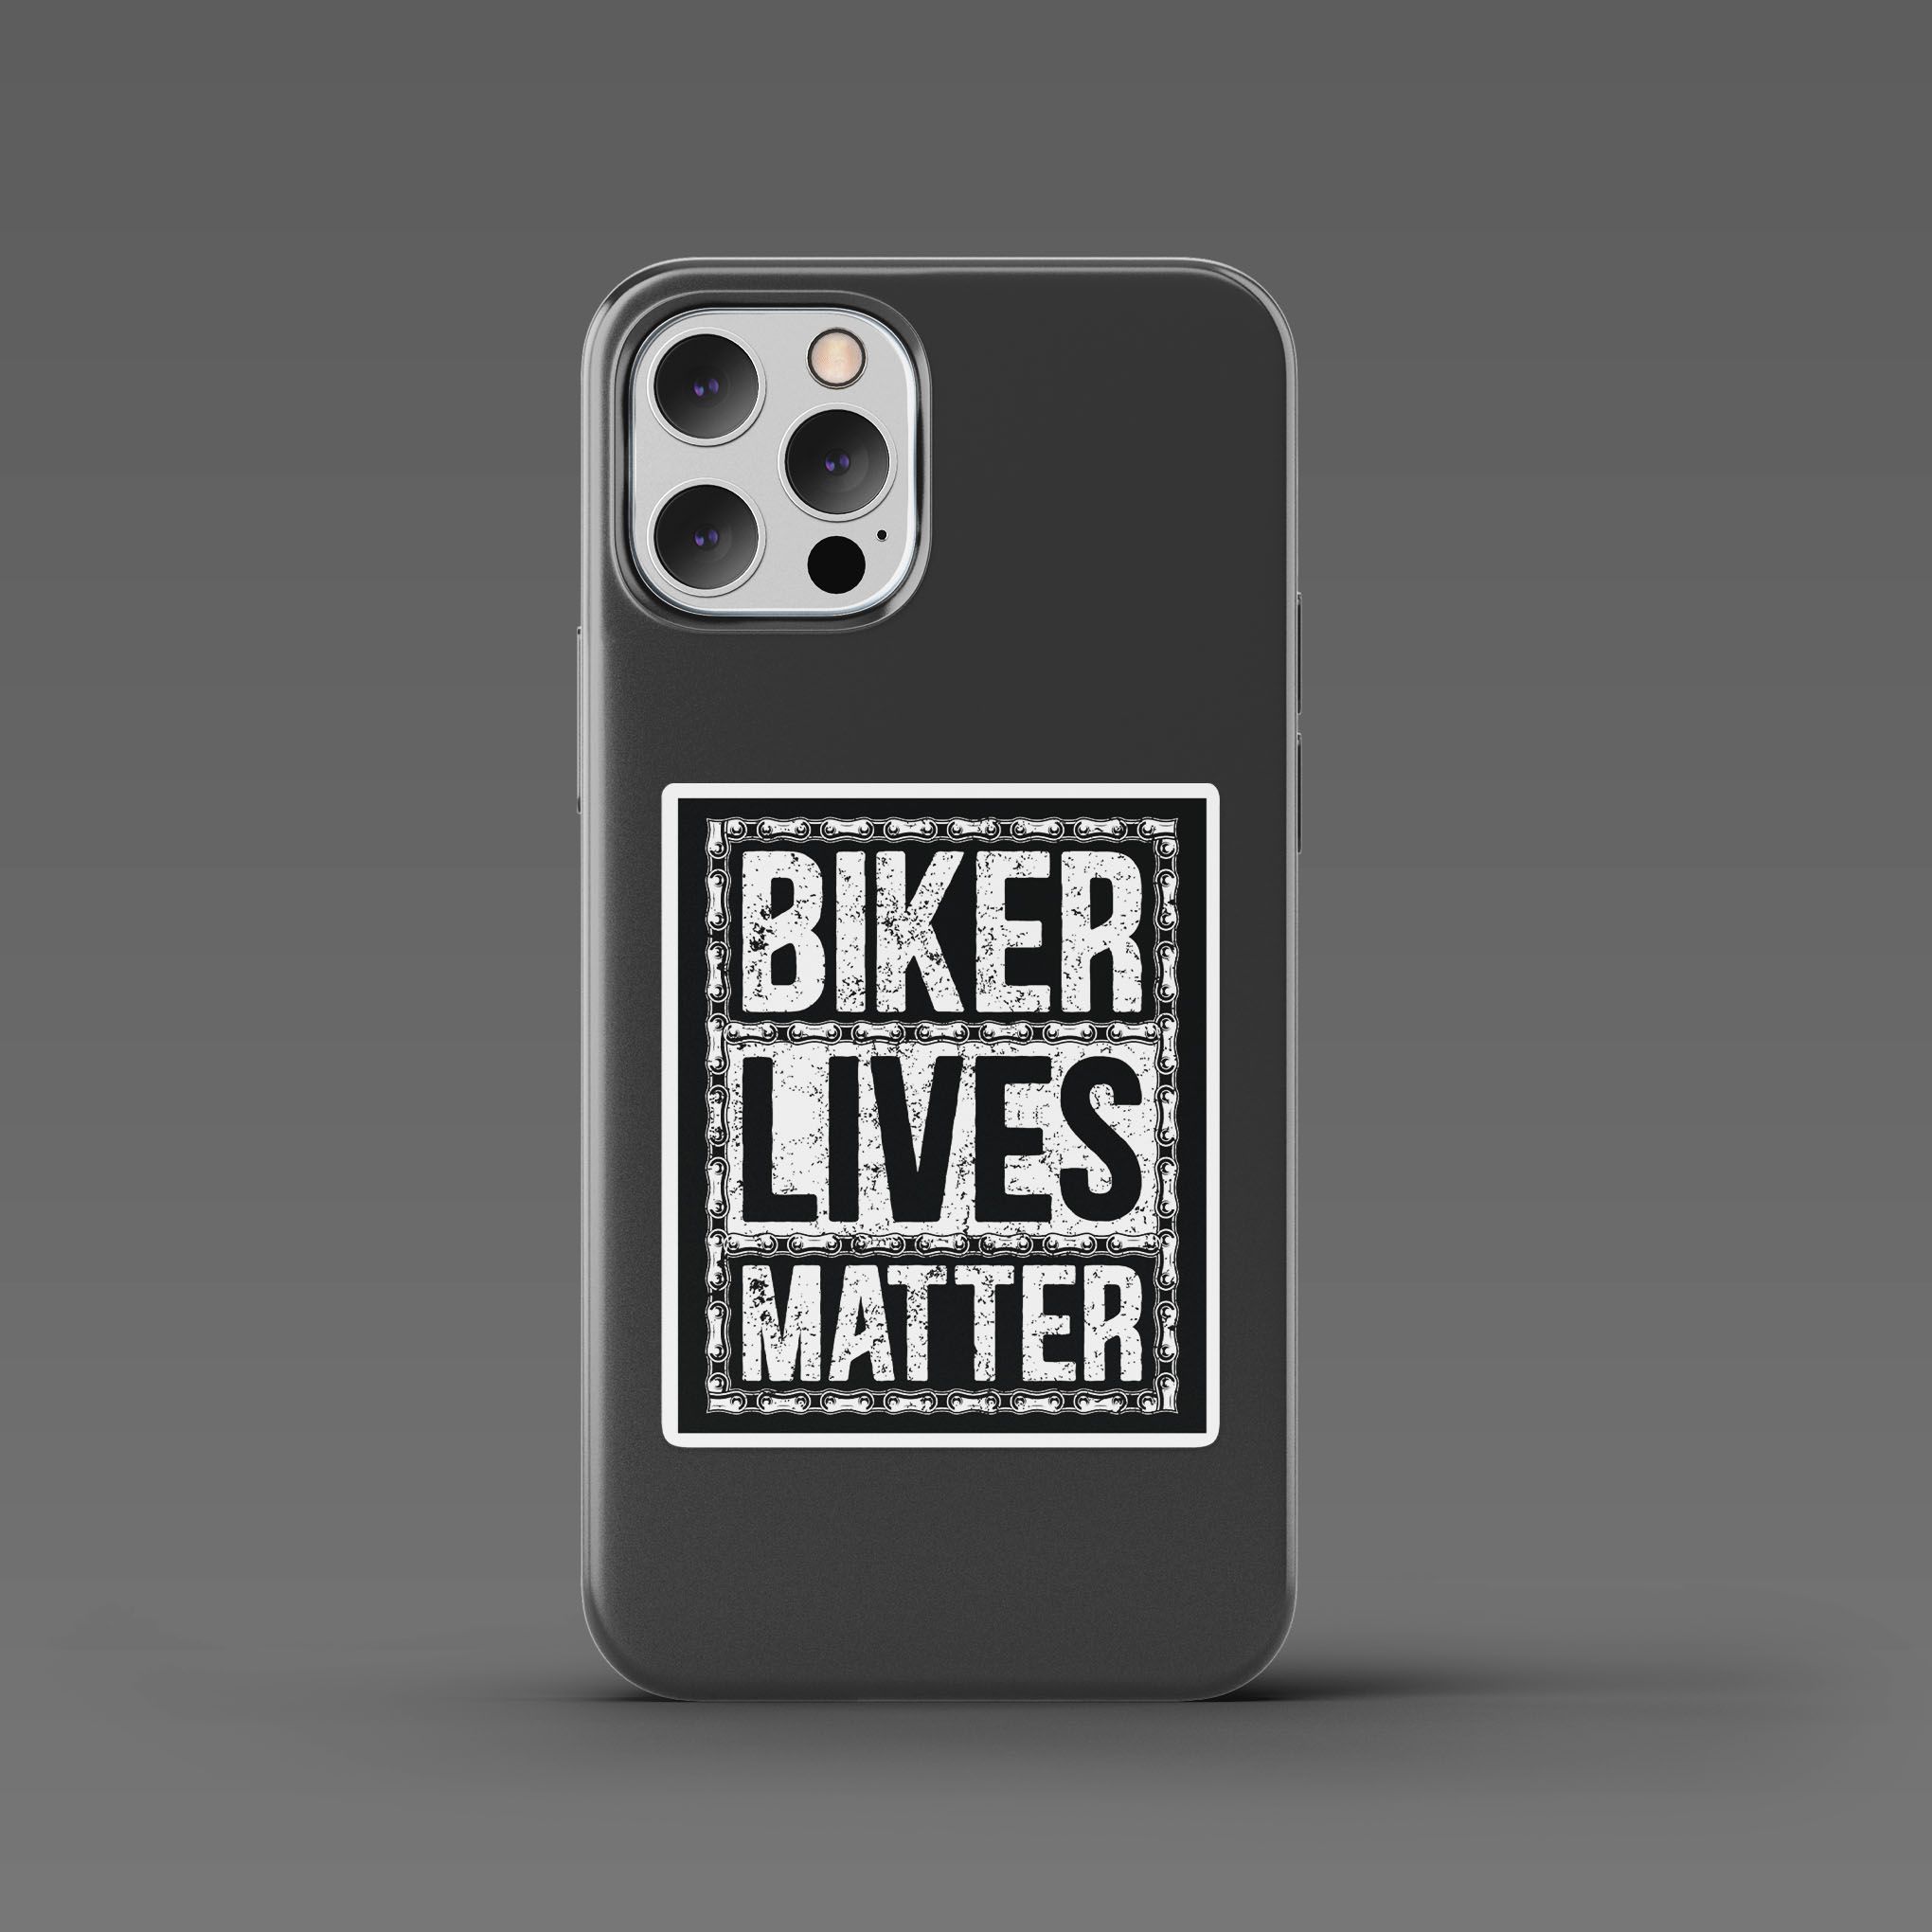 BIKER LIVE MATTER 7cm - Sticker Die-cut hình dán cắt rời